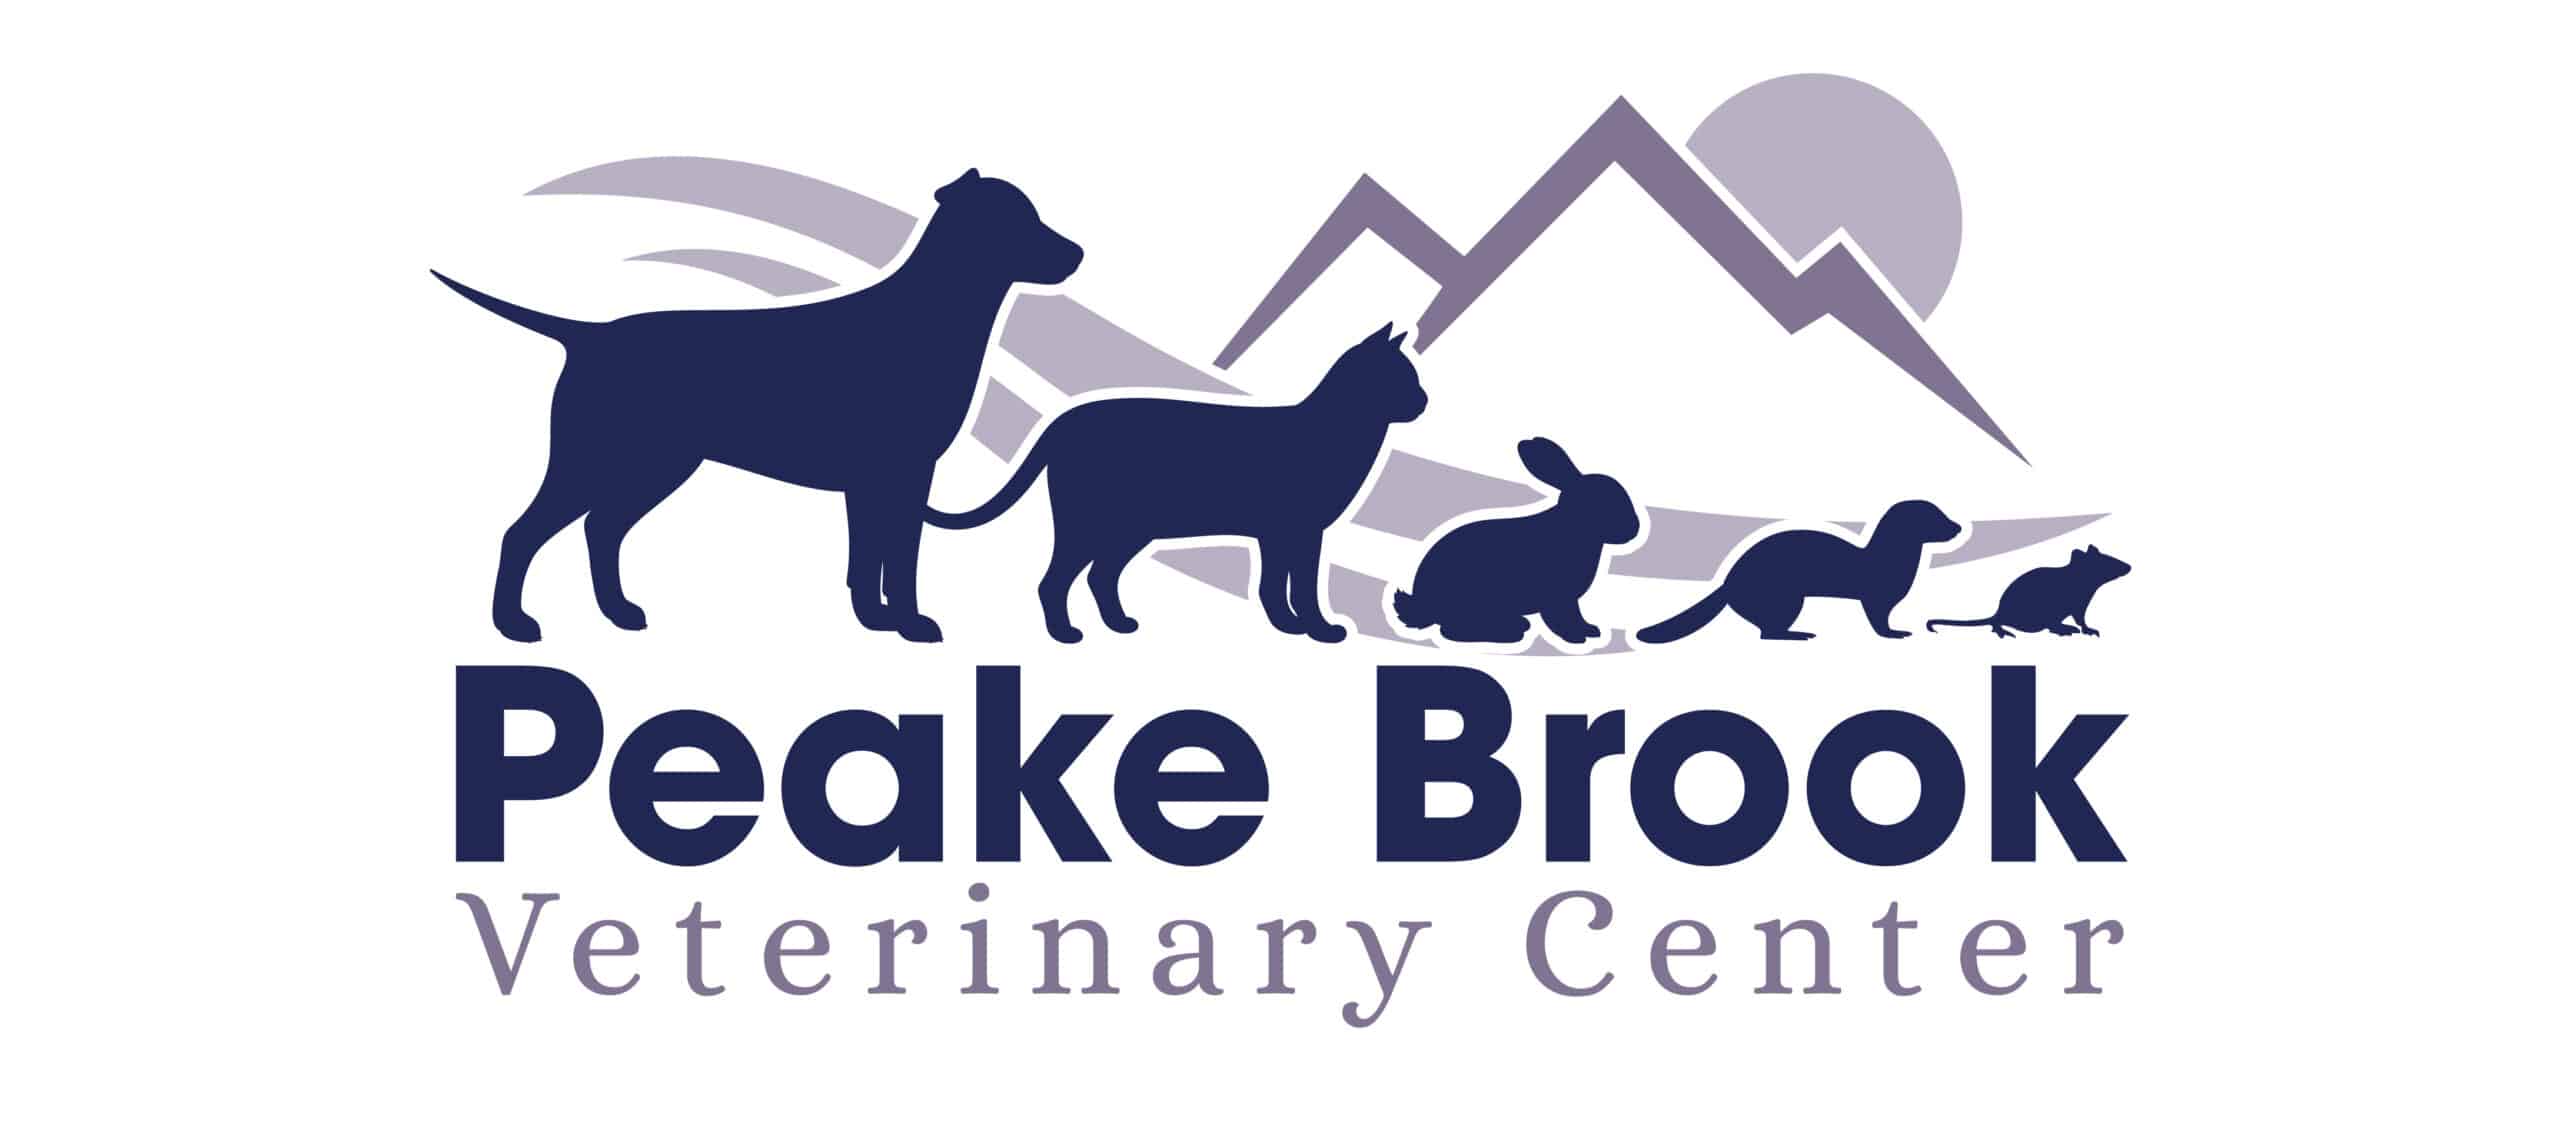 Peake Brook Veterinary Center | Woodstock, CT | 860-315-5955